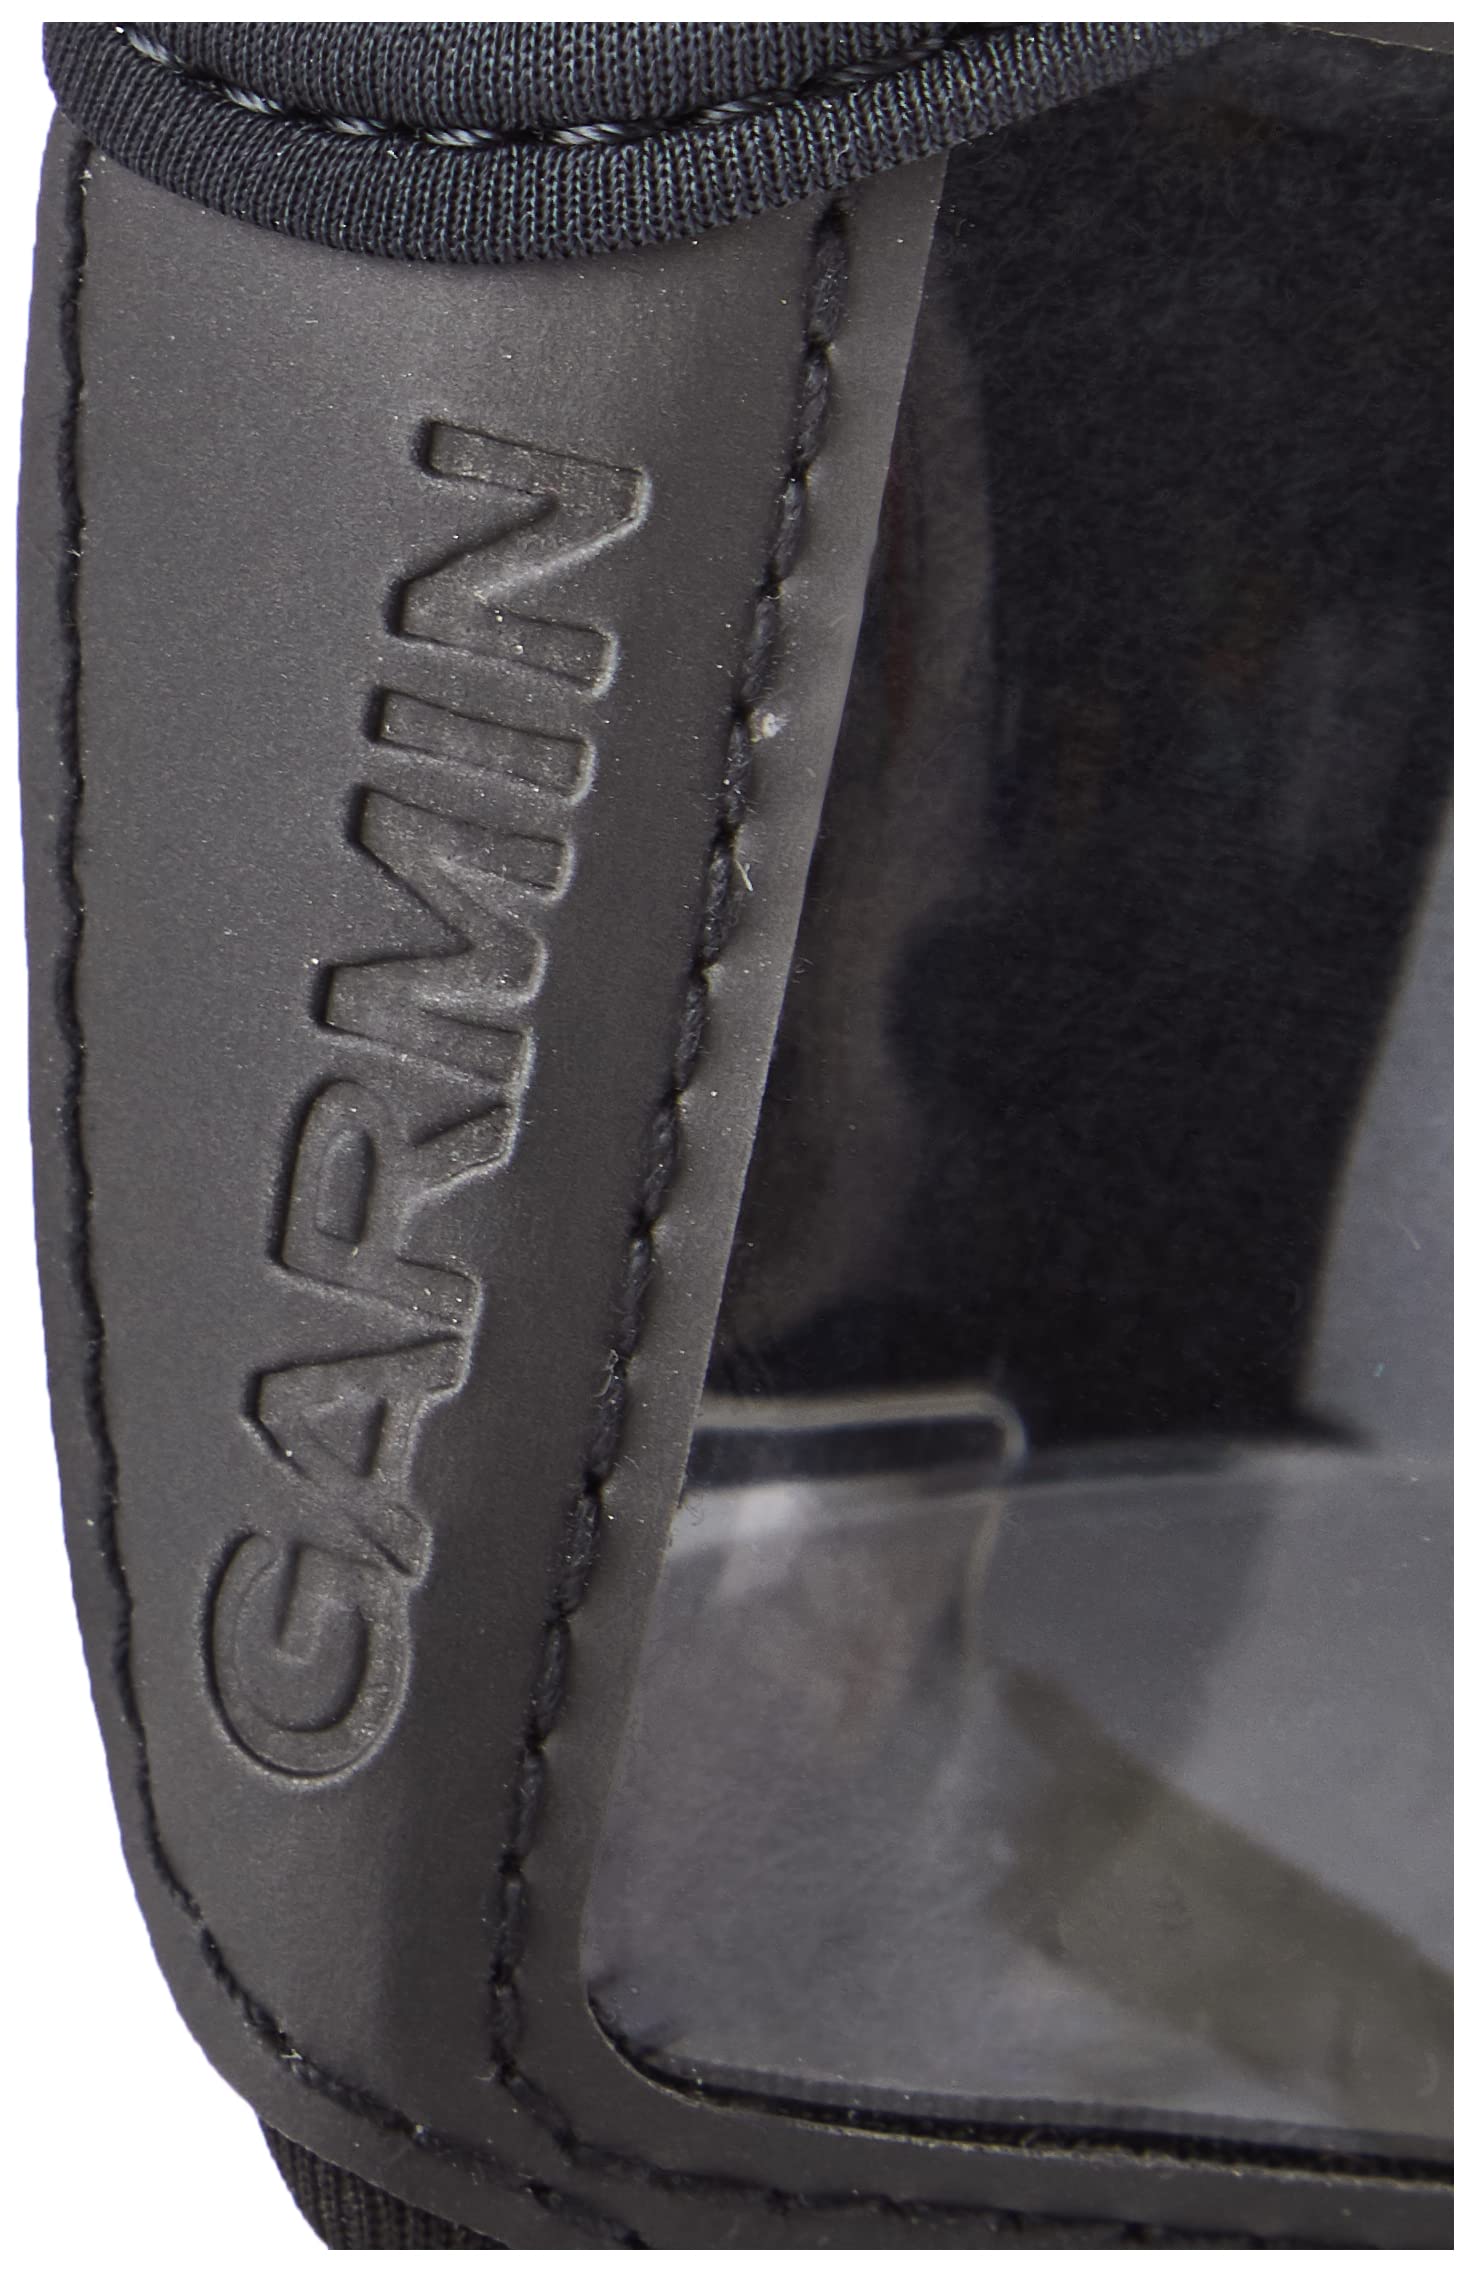 Garmin eTrex Carrying Case